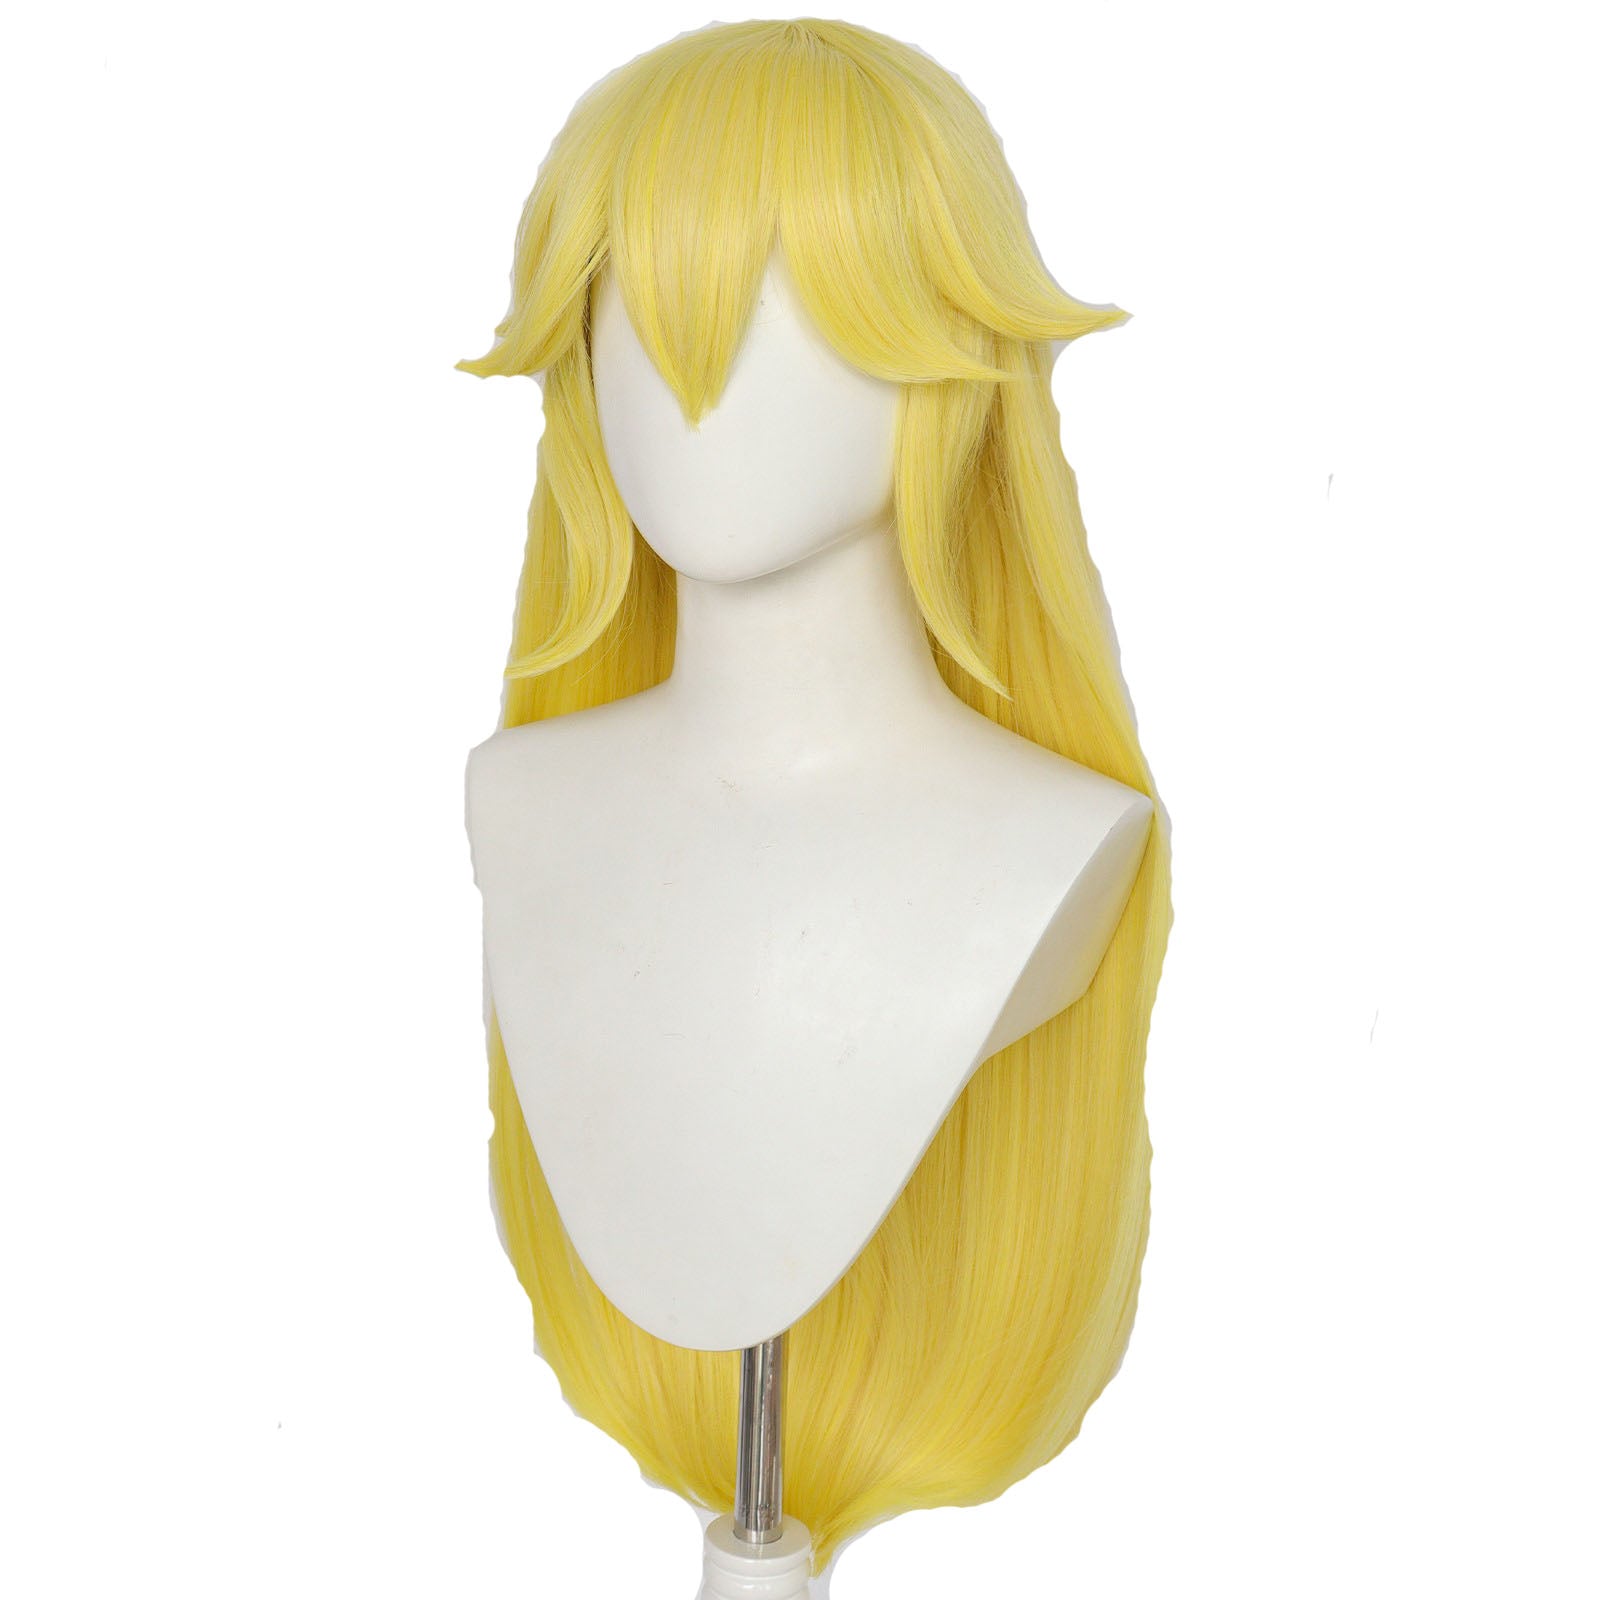 Rulercosplay Anime The Super Mario Bros Princess Peach Golden Long Cosplay Wig